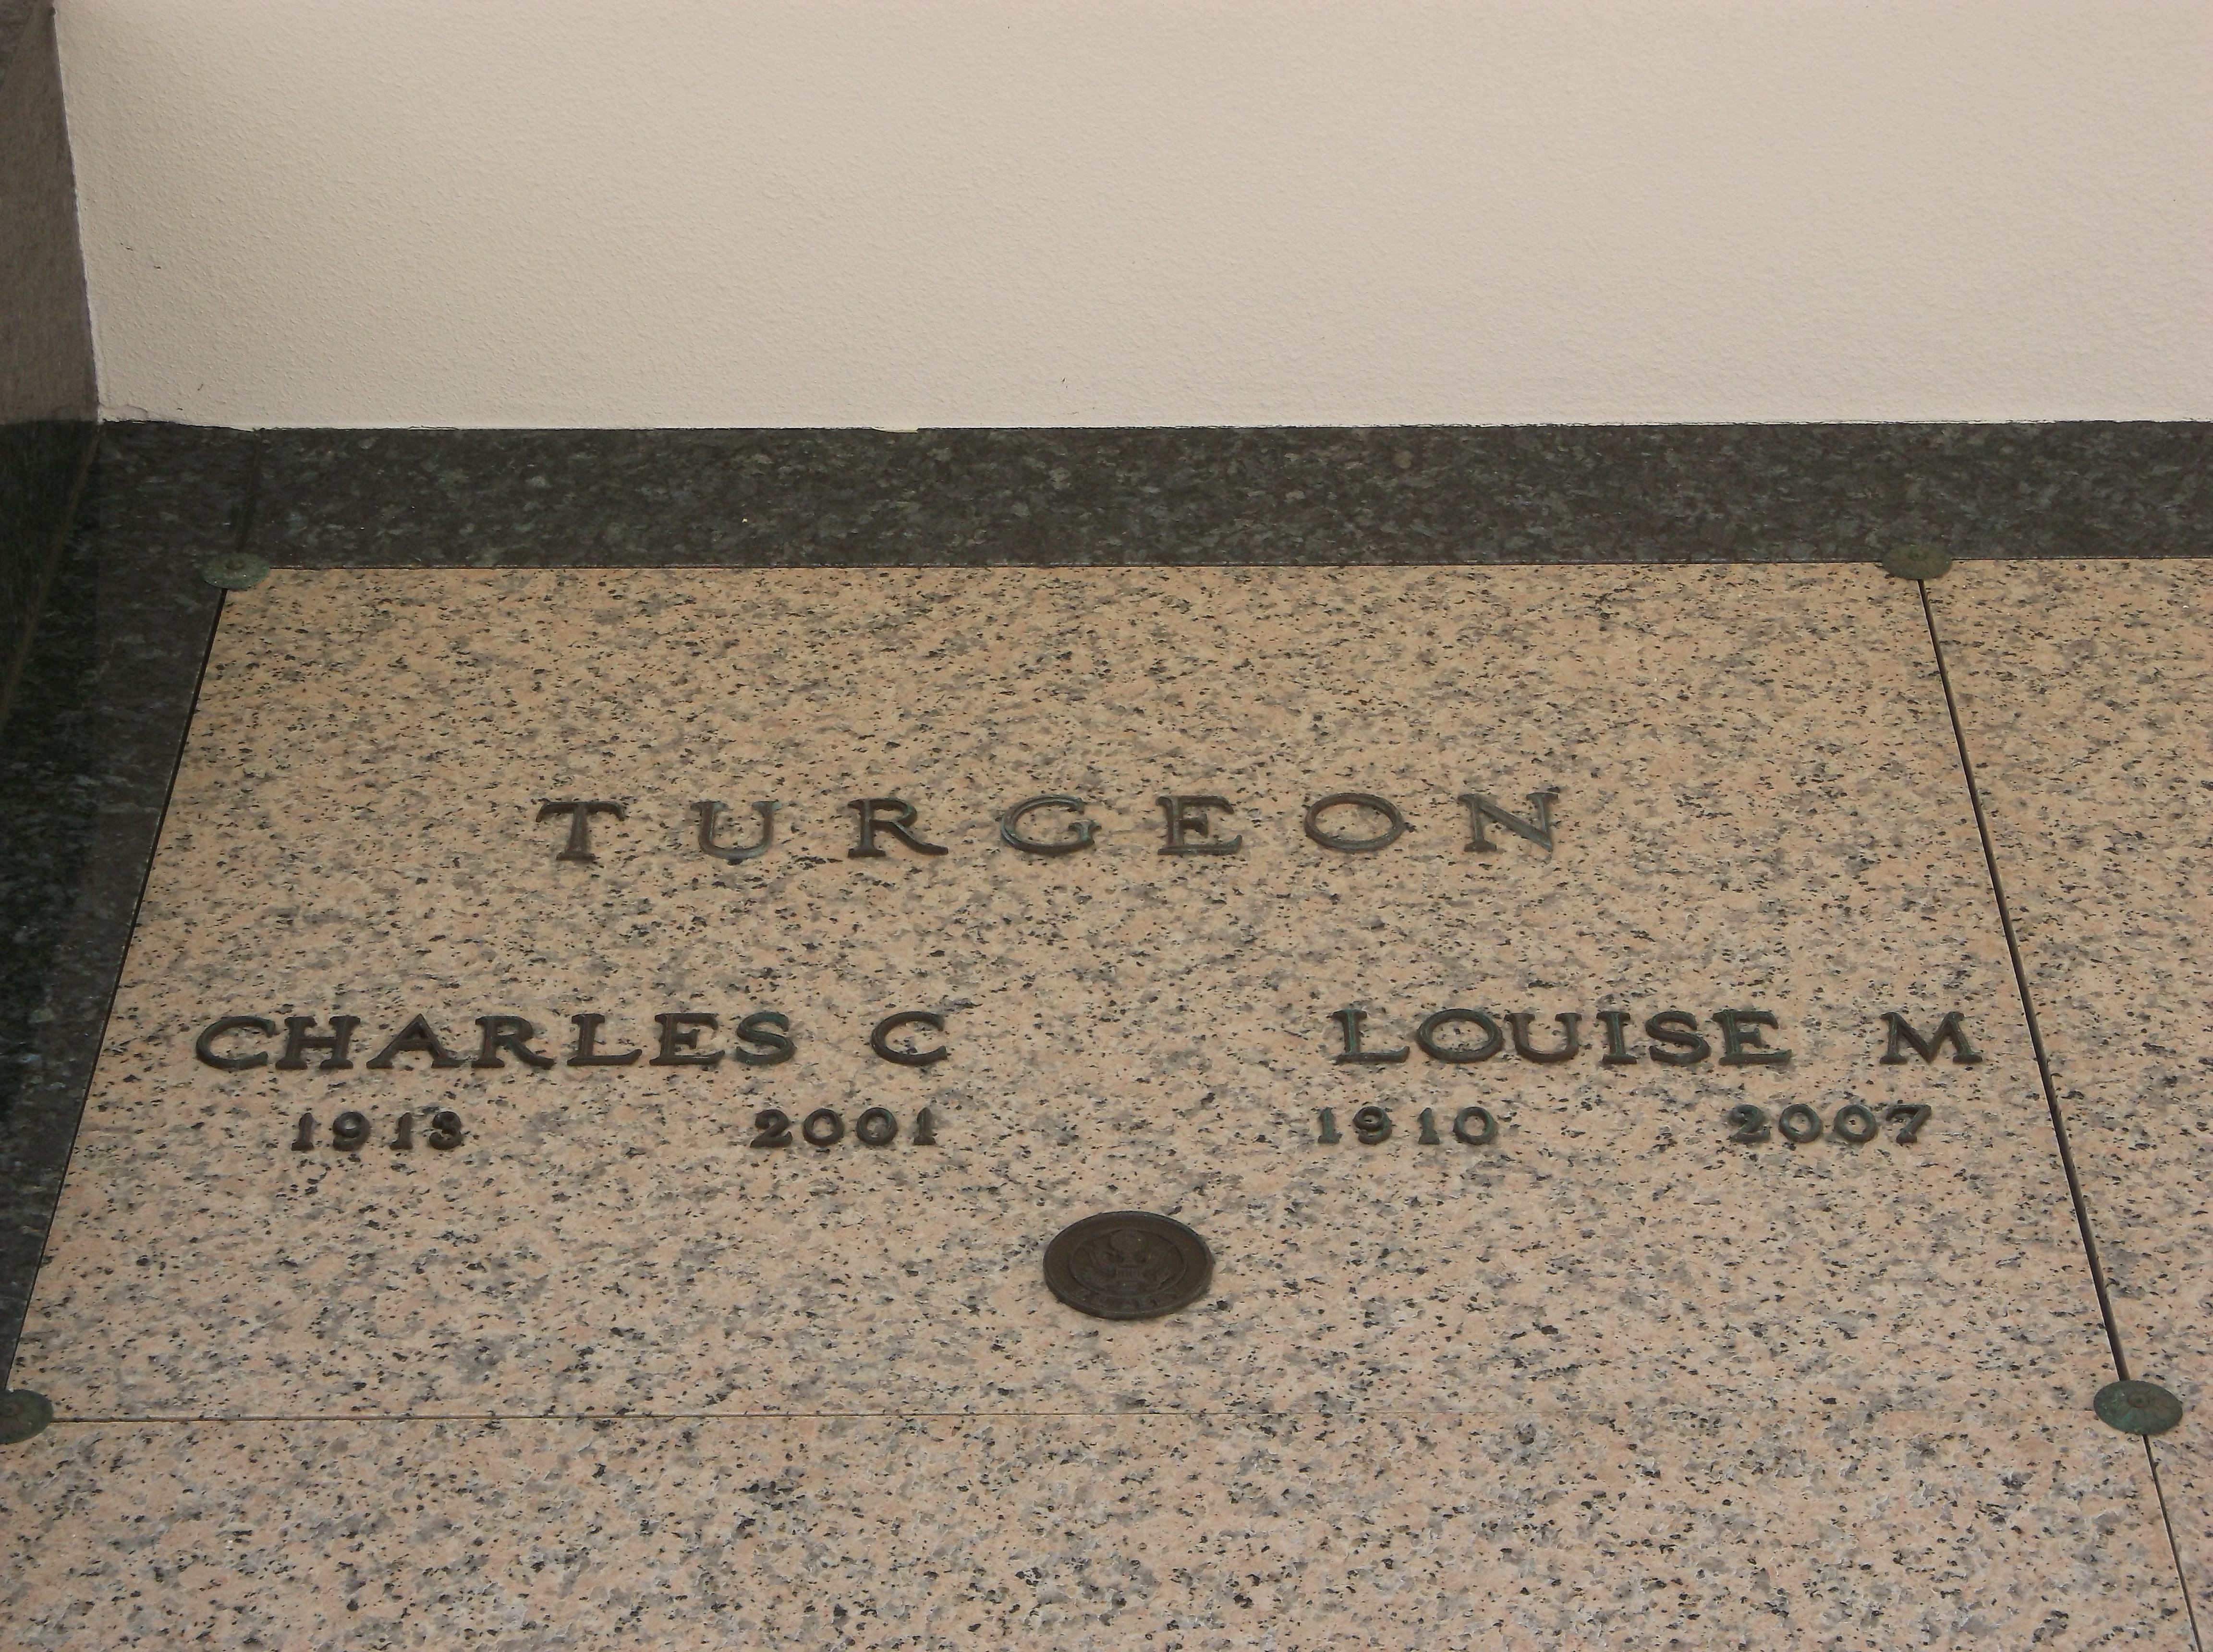 Louise M Turgeon